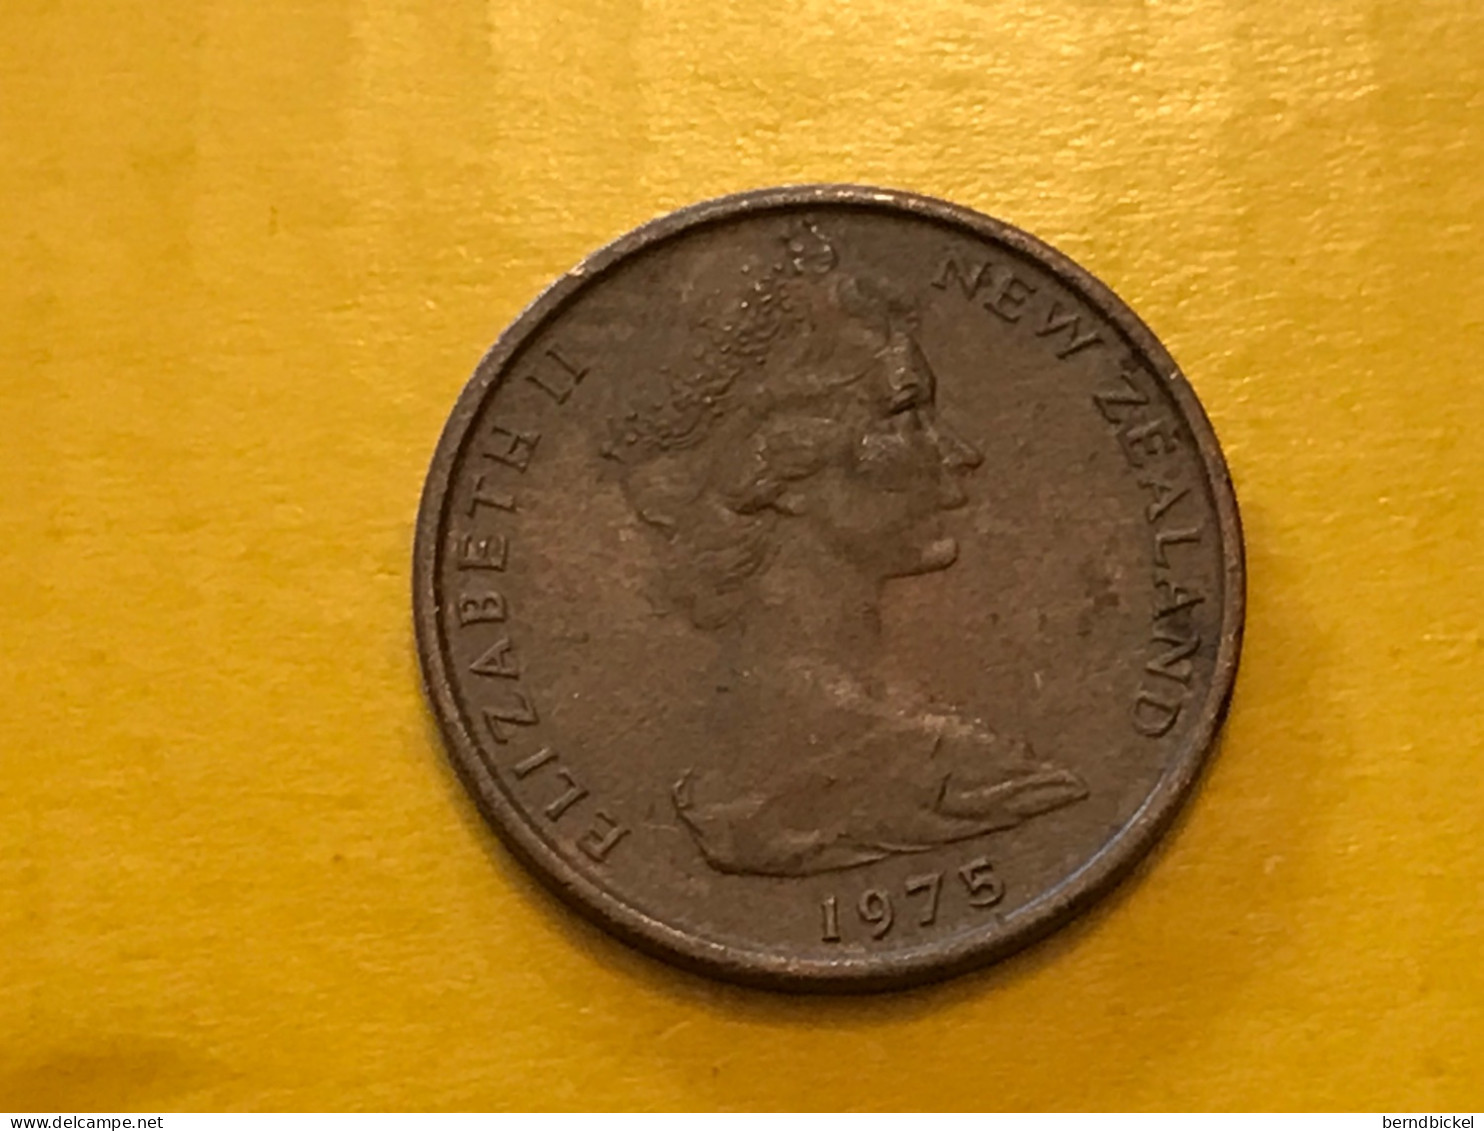 Münze Münzen Umlaufmünze Neuseeland 1 Cent 1975 - Nueva Zelanda